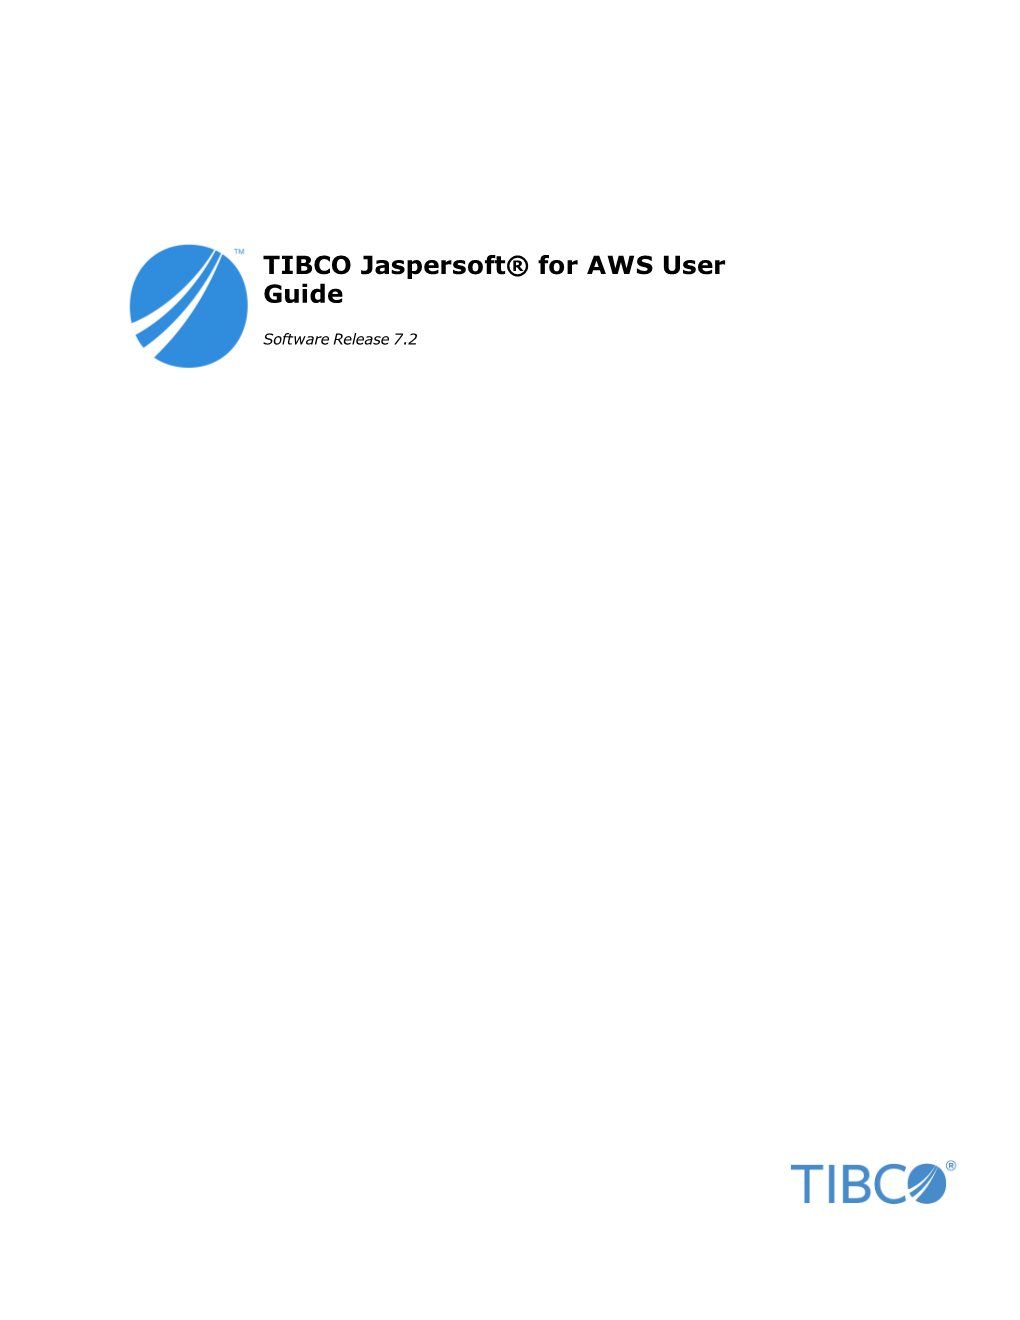 TIBCO Jaspersoft® for AWS User Guide